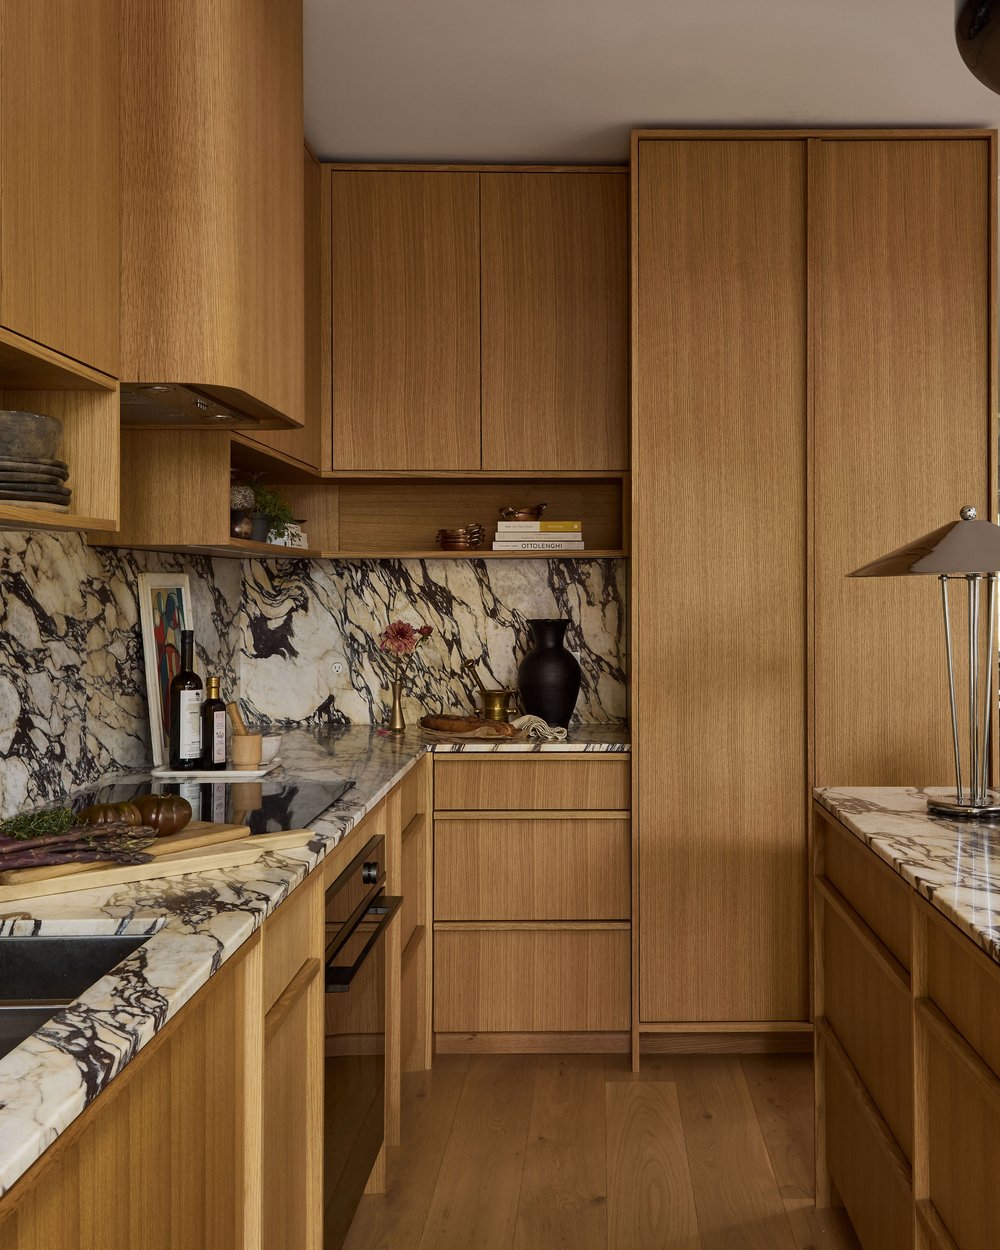 Lauren Miller x Sarah Birnie - Beech Ave. Wood kitchen cabinets and marble countertop and backsplash. Design planning tips